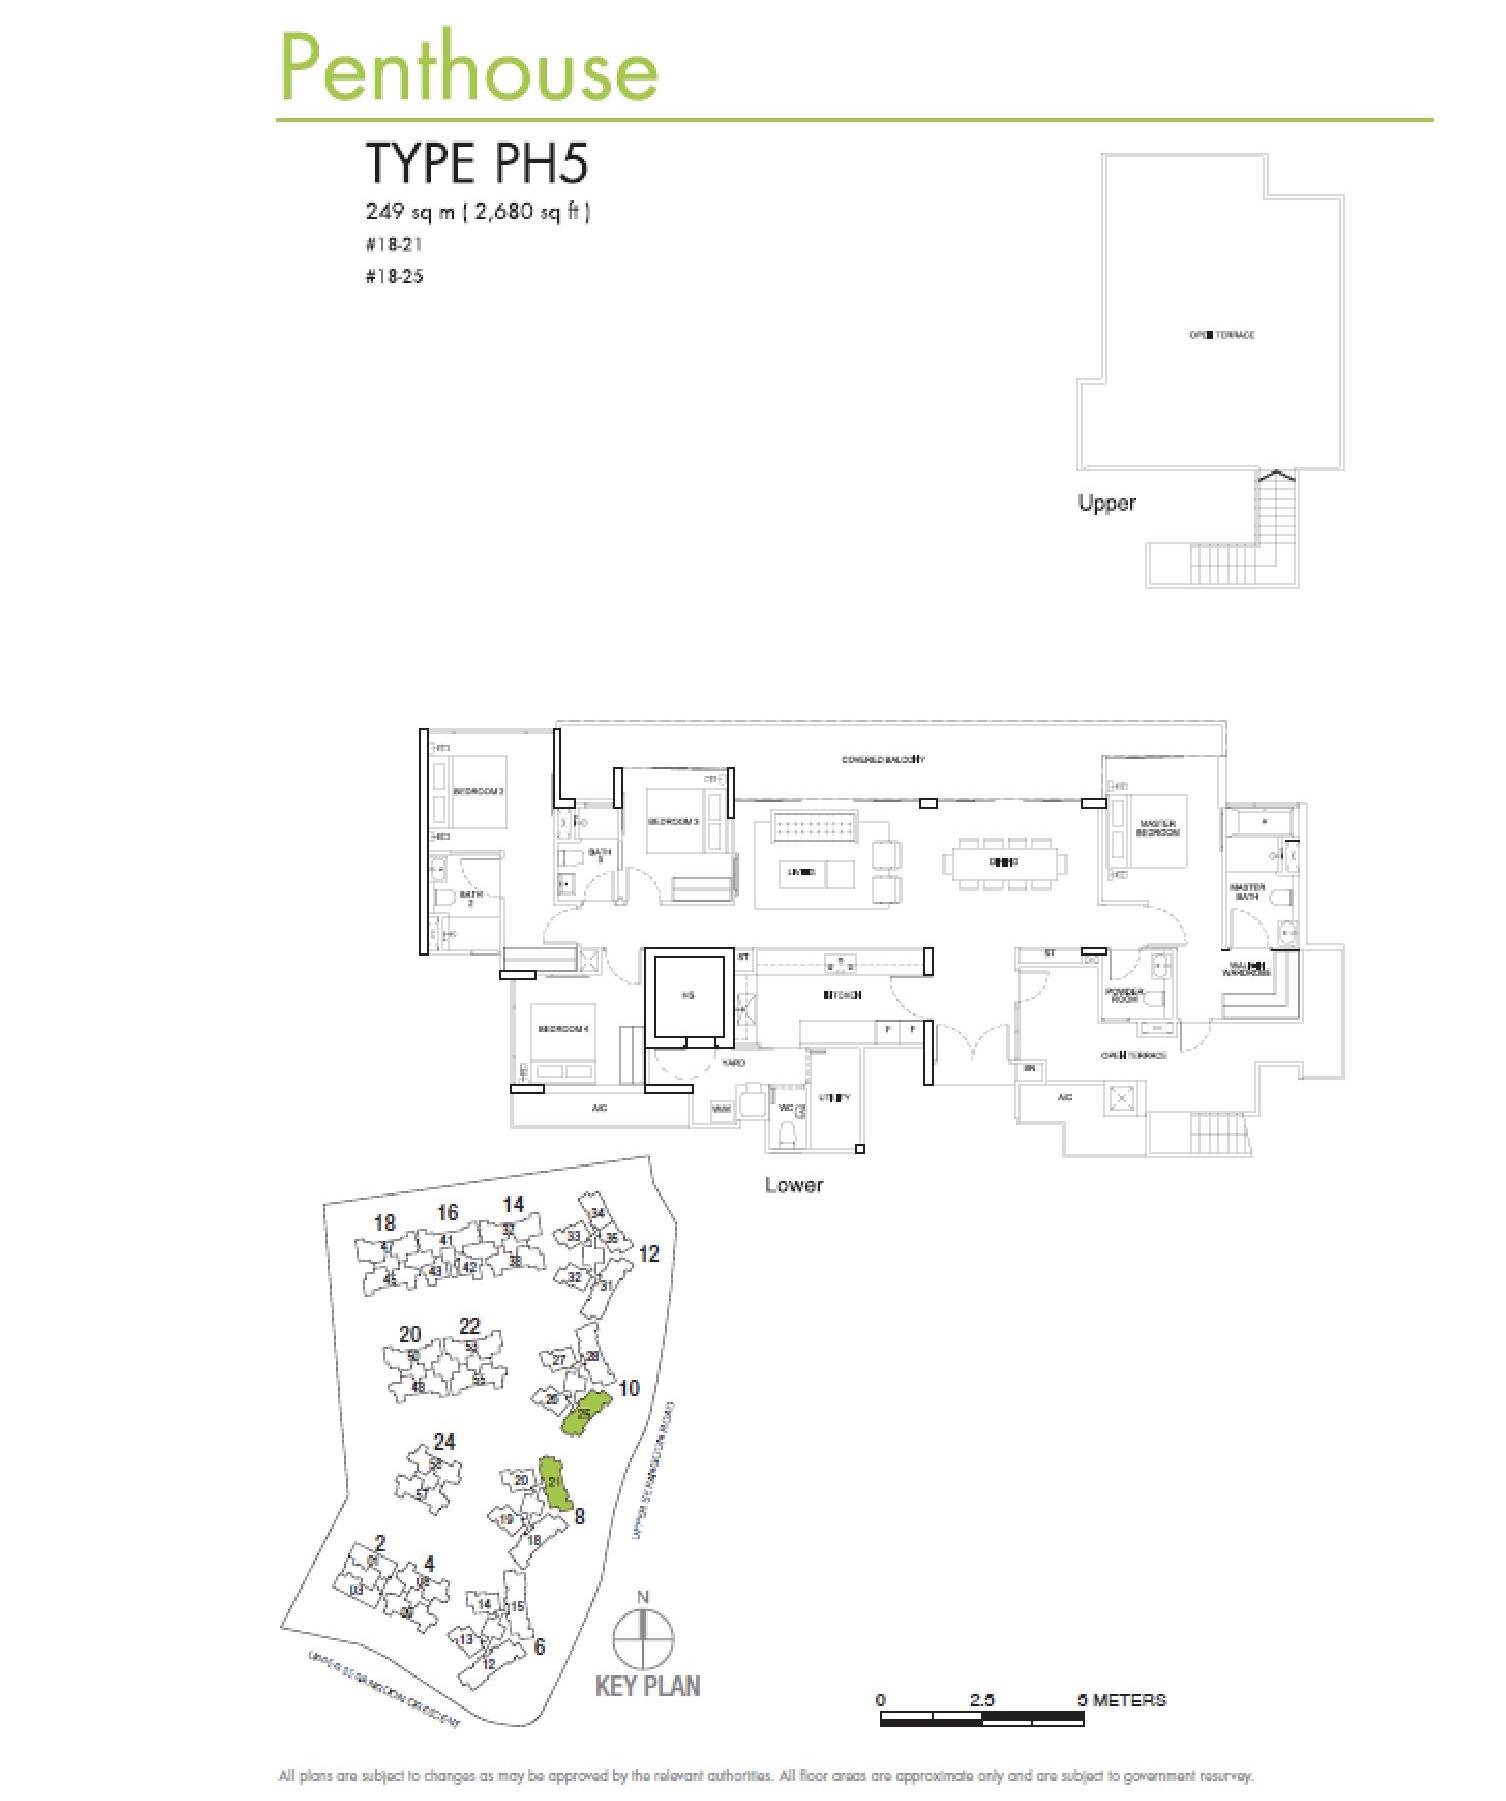 RiverSails 4 Bedroom Penthouse Type PH5 Floor Plans